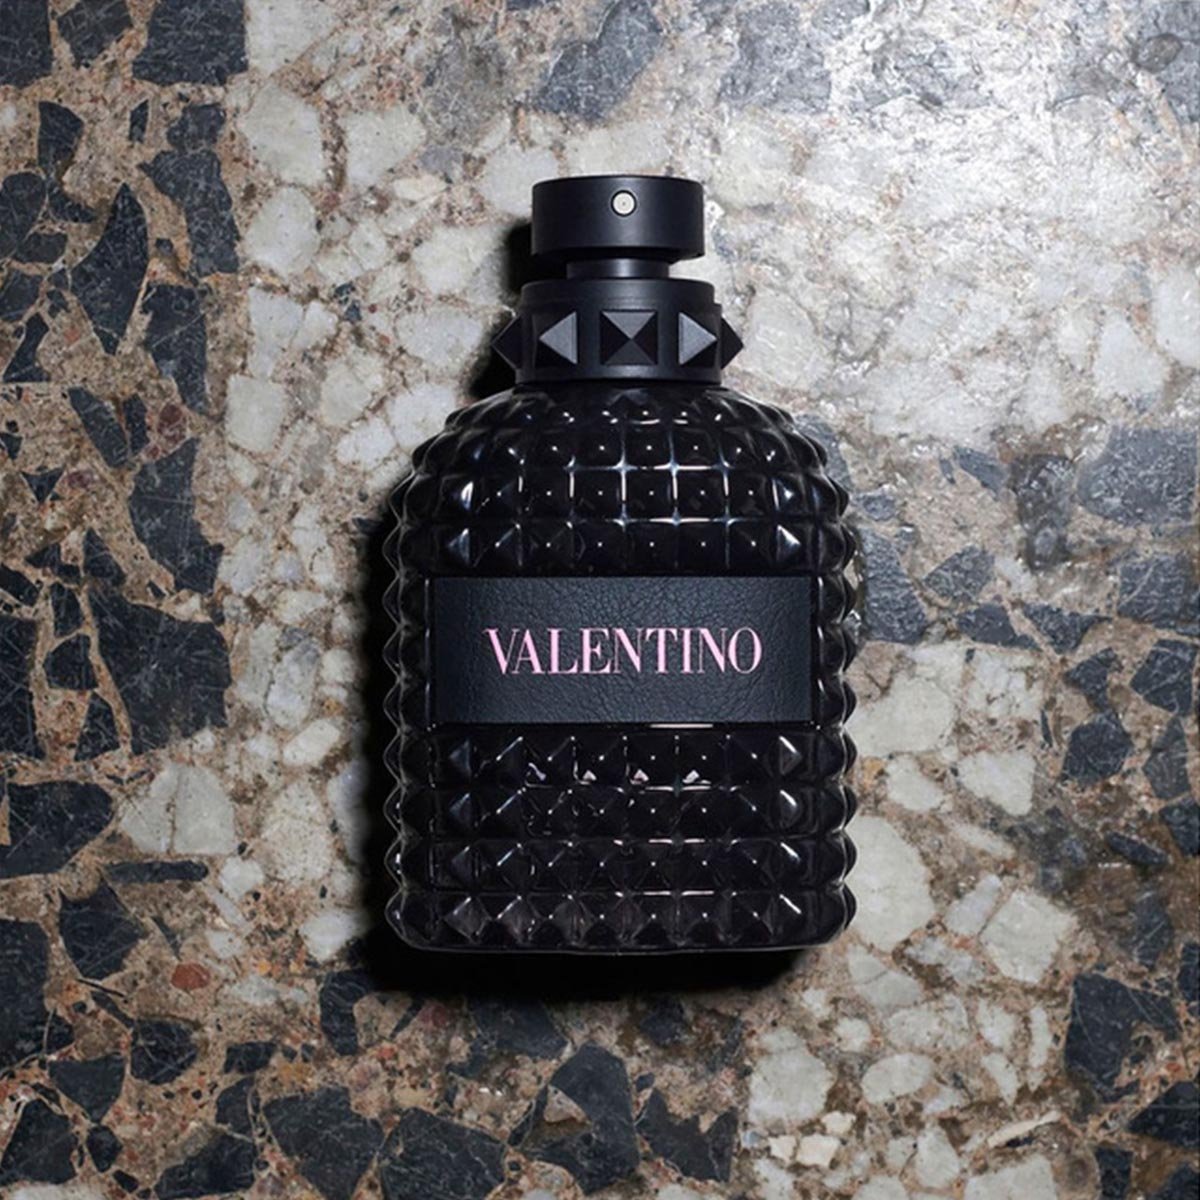 Valentino Uomo Born In Roma Gift Set - My Perfume Shop Australia